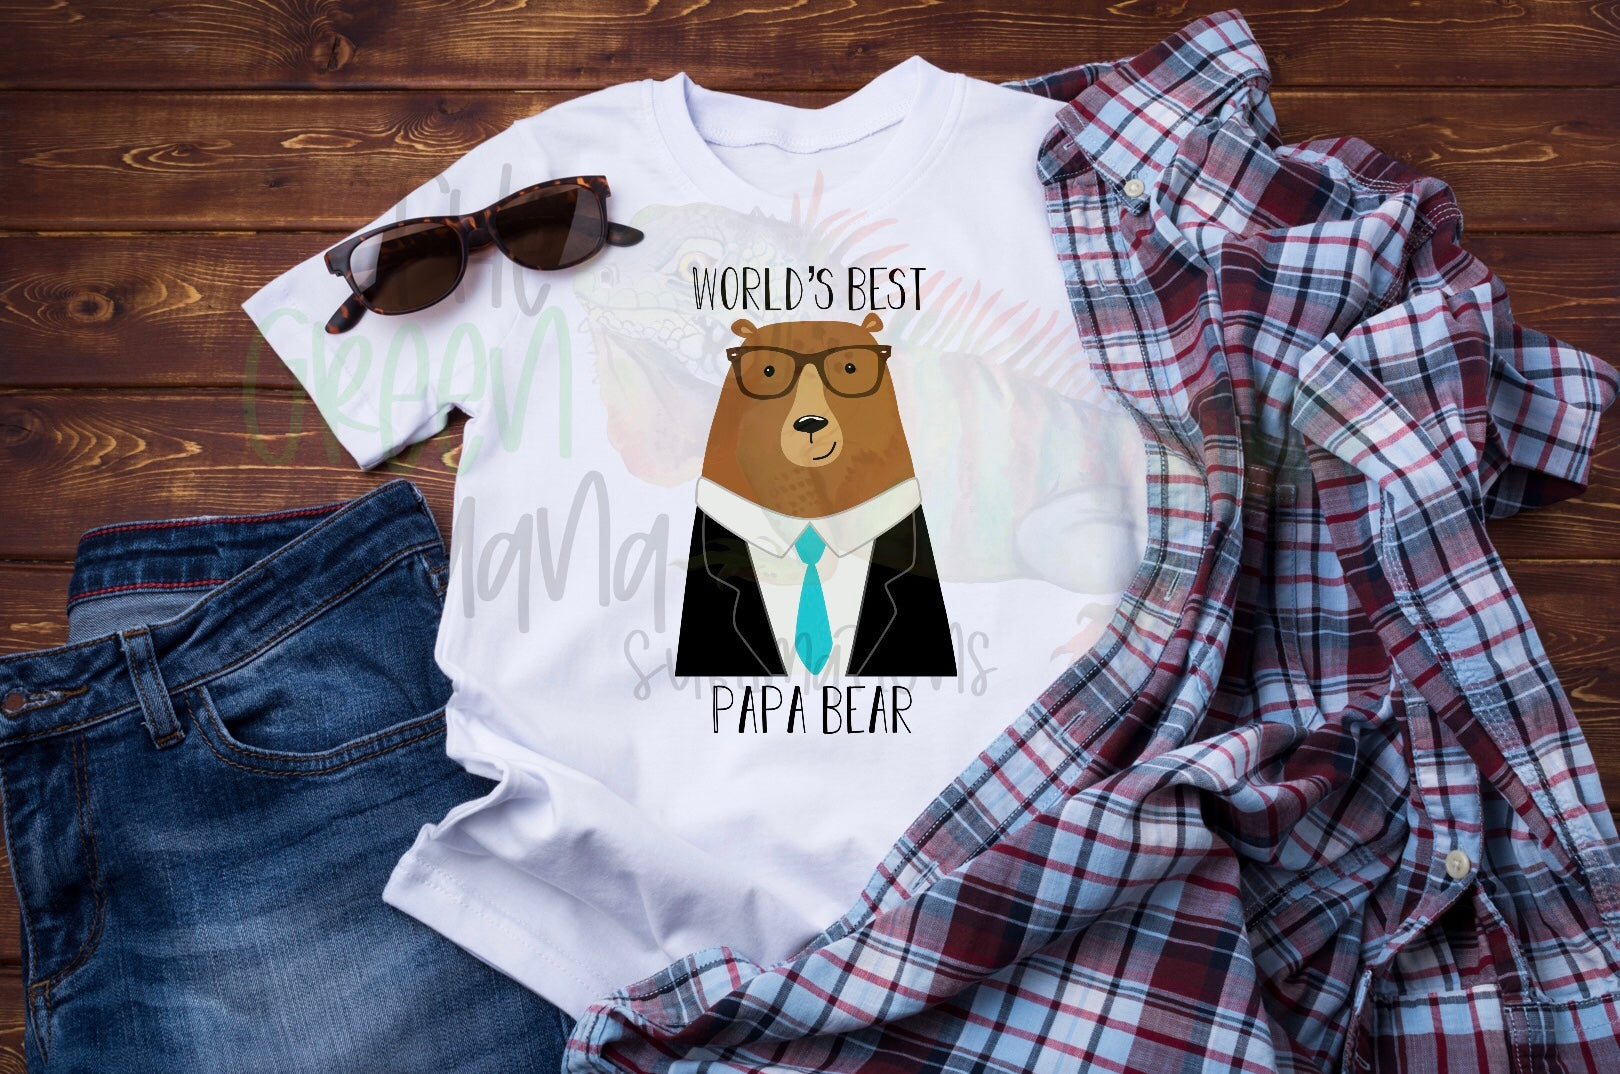 World’s best papa bear